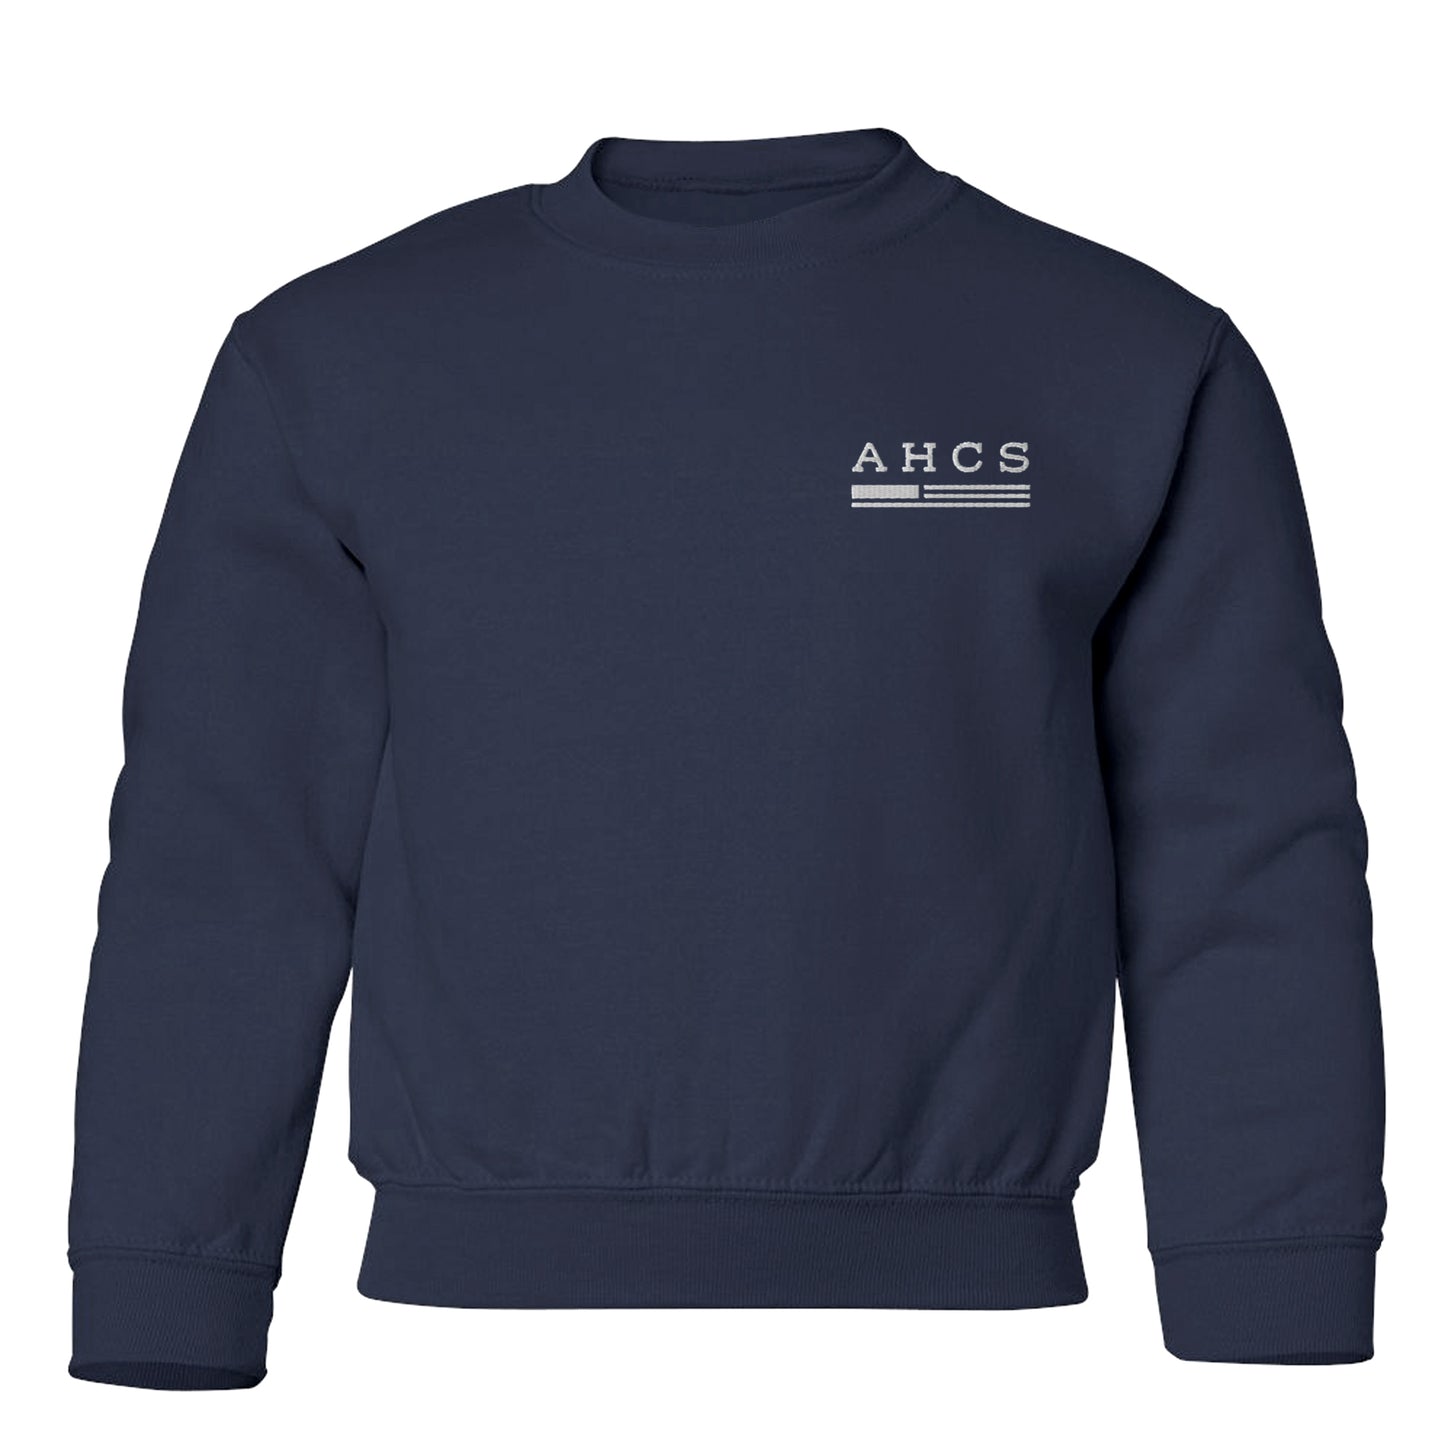 TK-8 "AHCS" Uniform Crewneck Sweatshirt